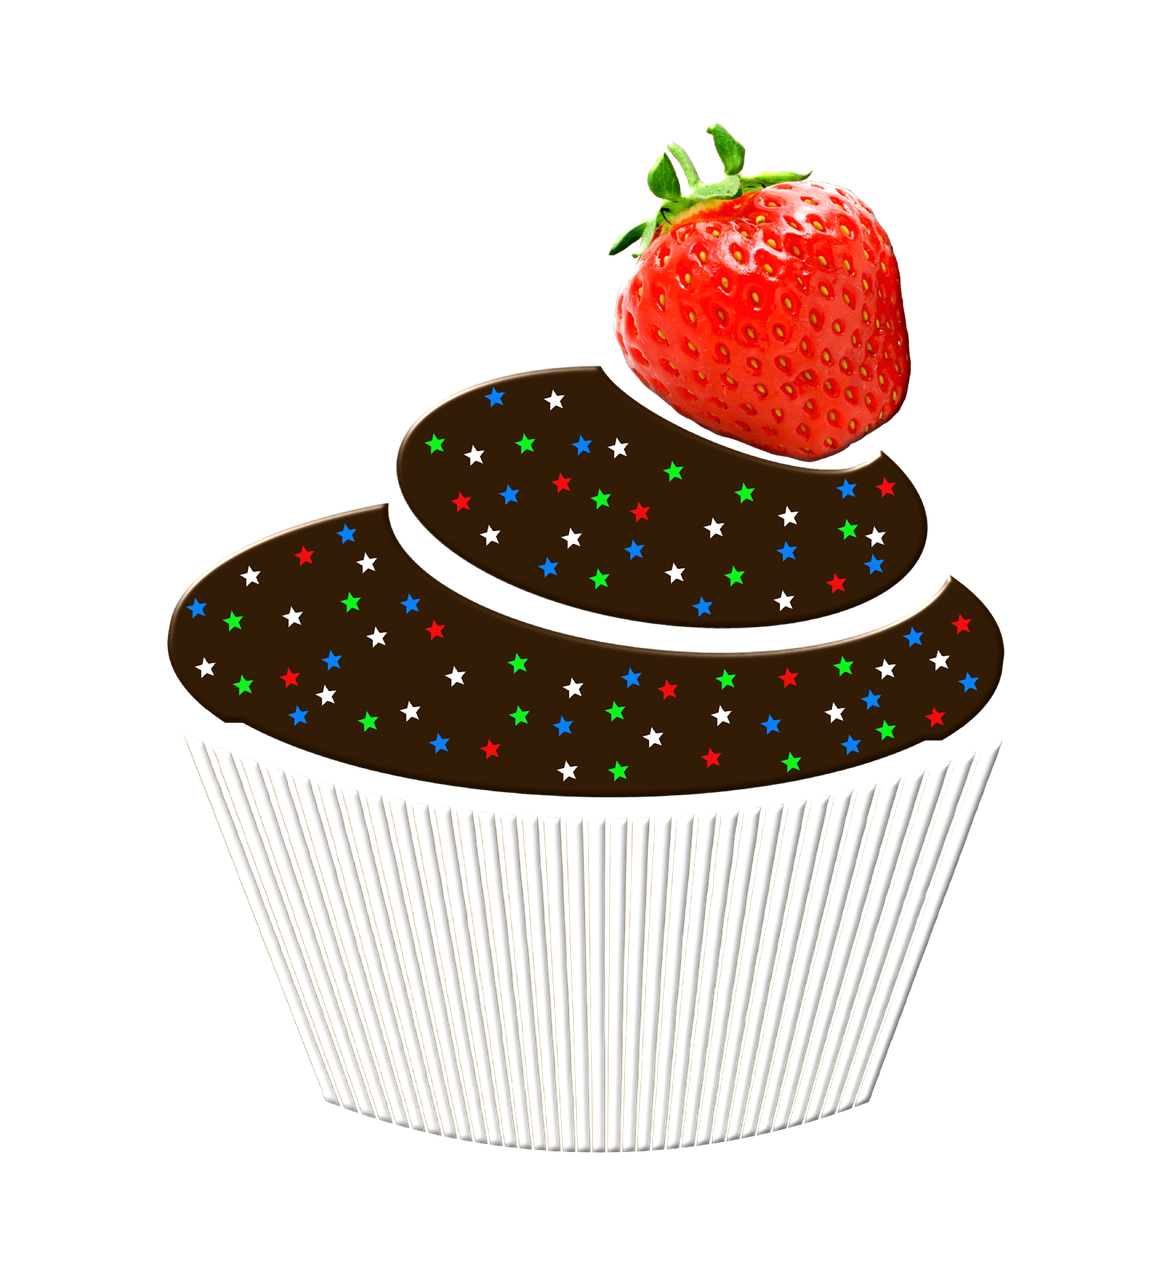 muffin fruit strawberry free photo